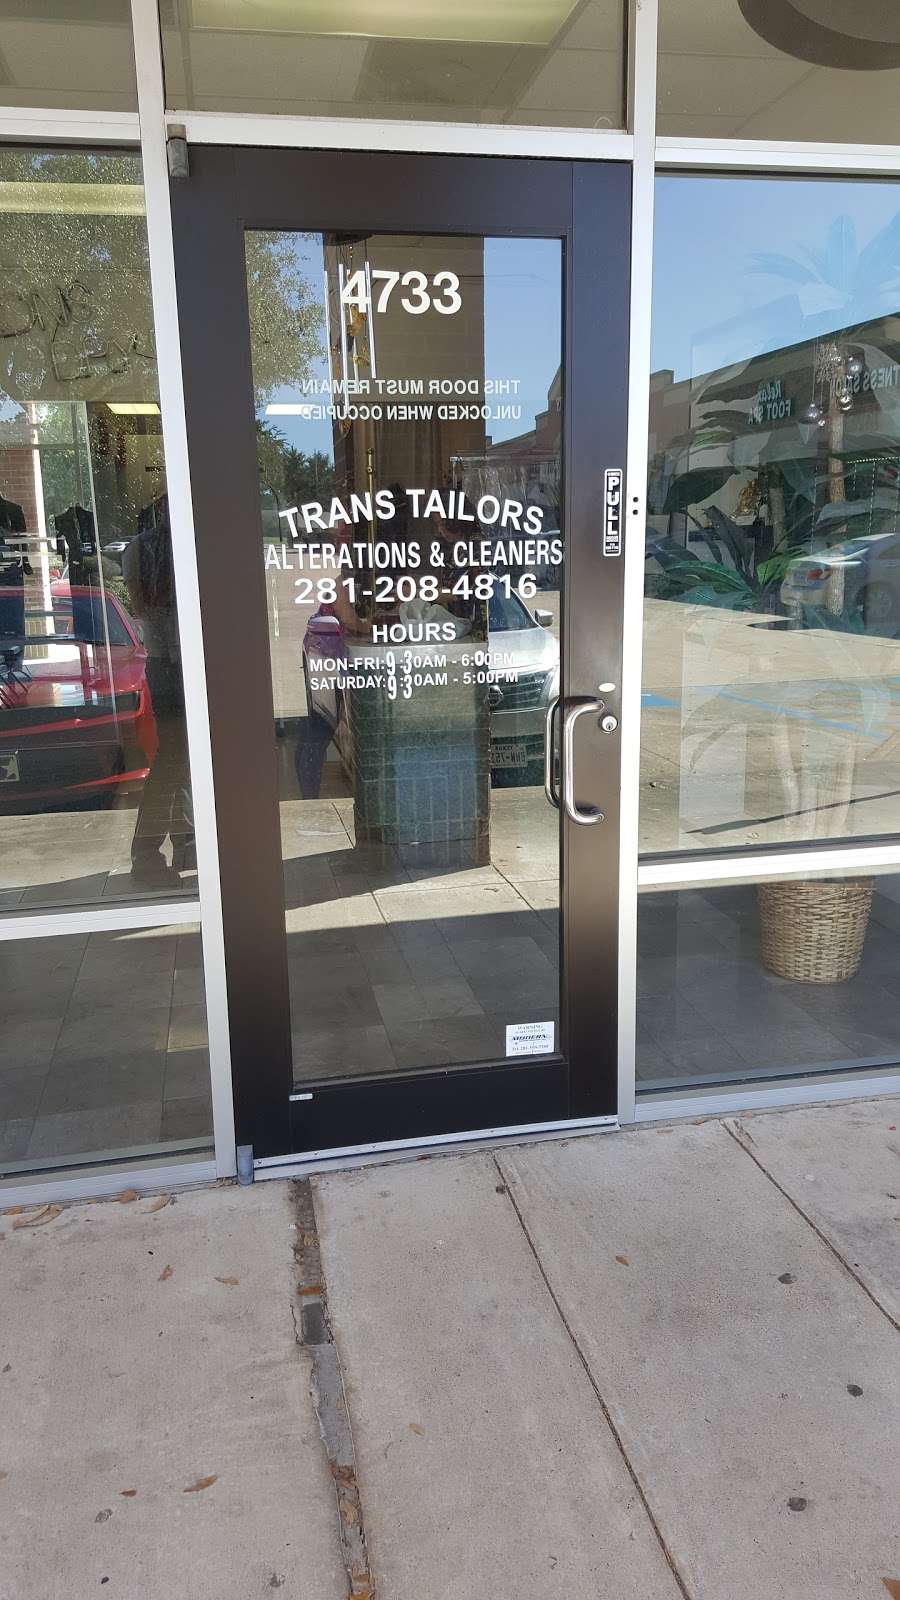 Trans Tailors | 4733 Lexington Blvd, Missouri City, TX 77459 | Phone: (281) 208-4816